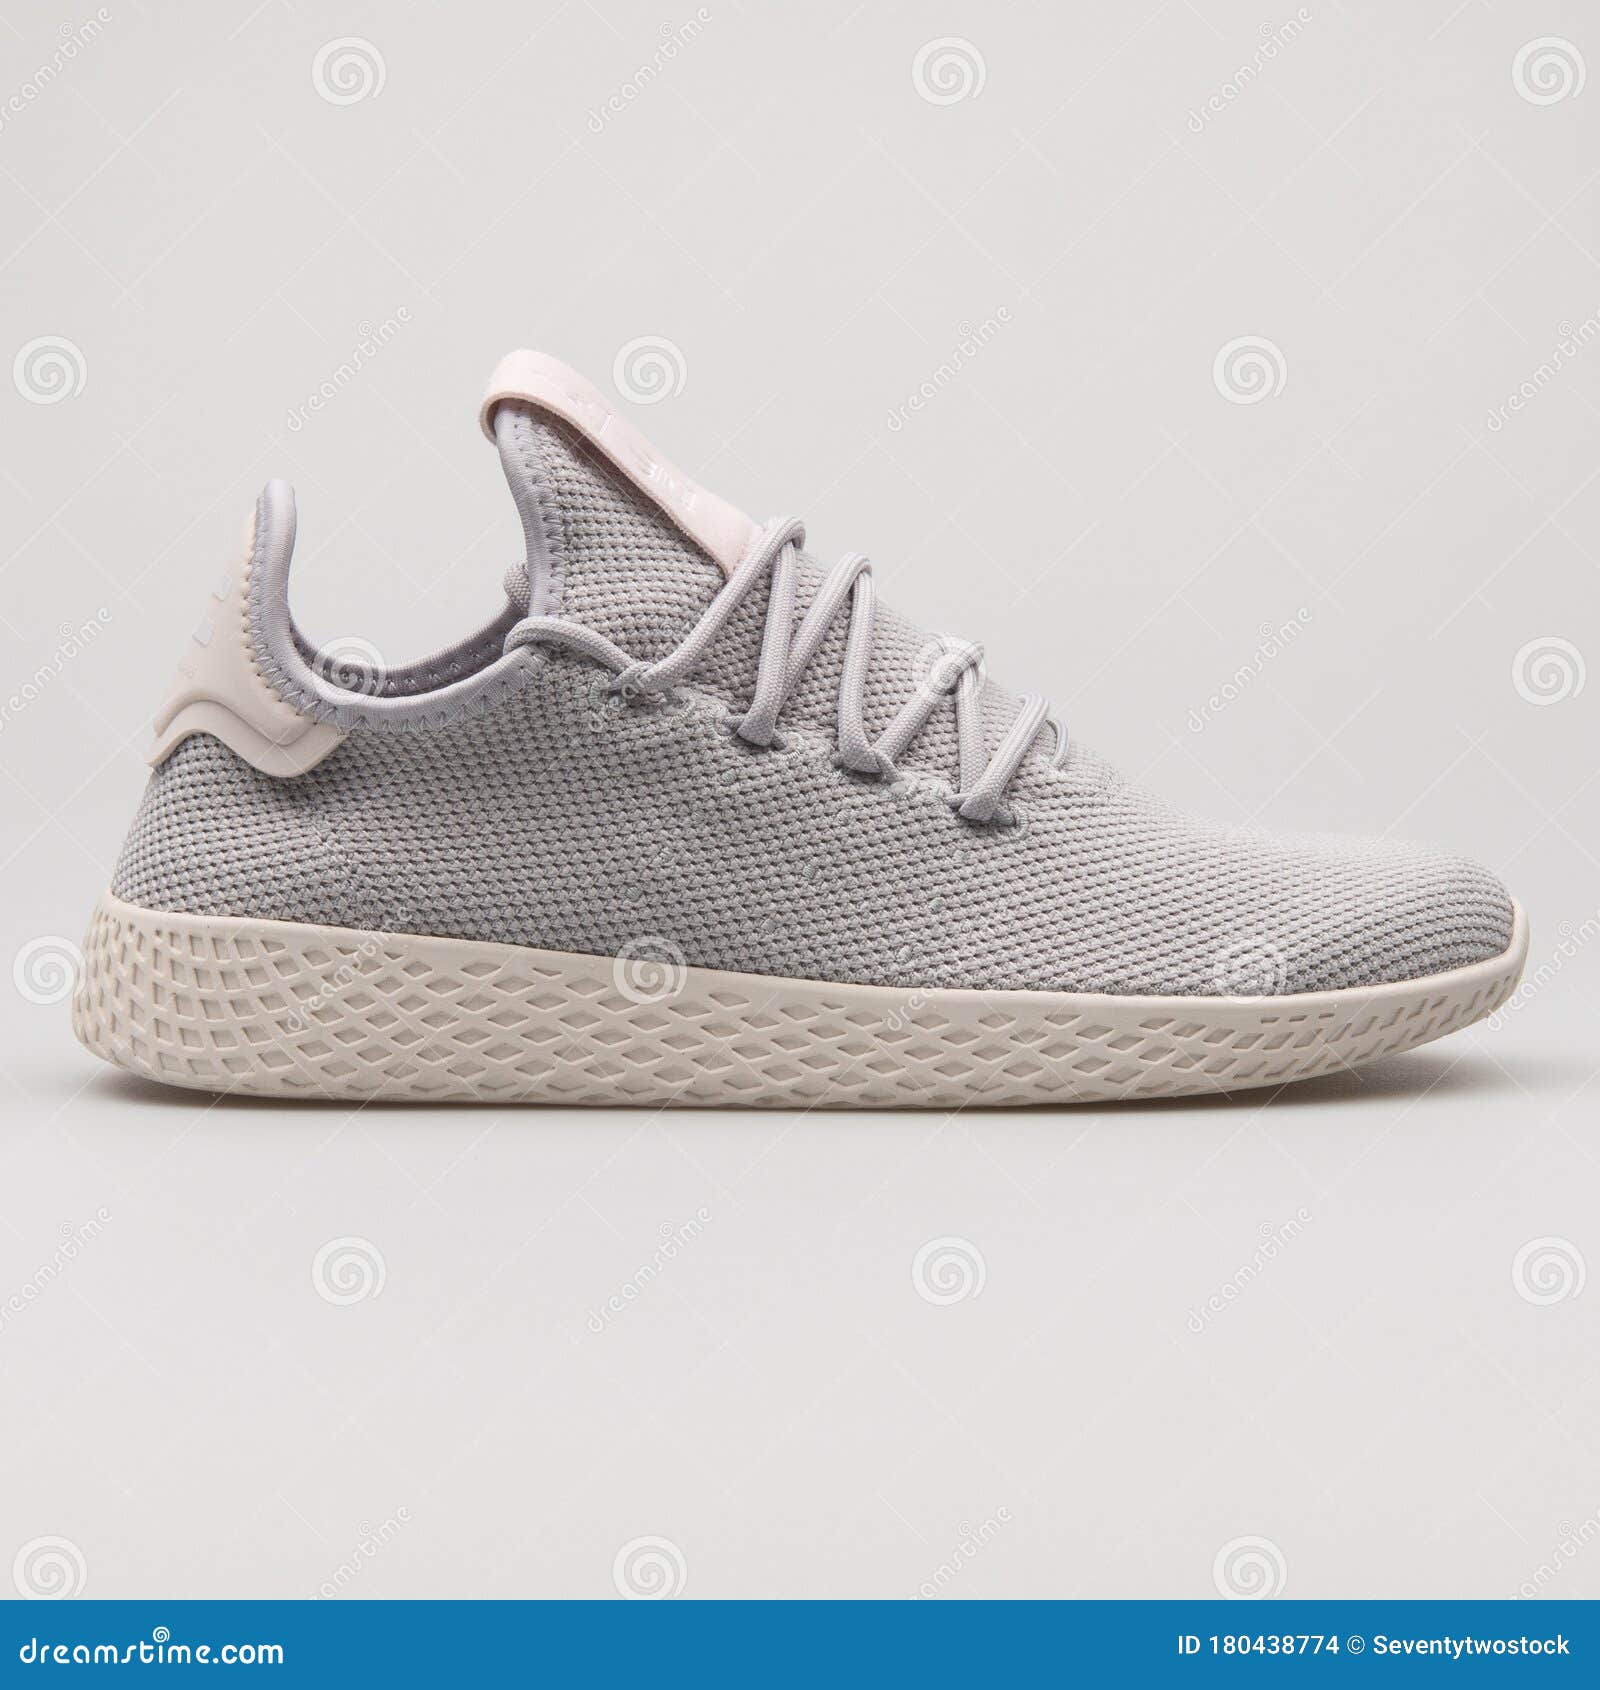 Adidas Pw Tenis Hu Grises Sneaker Imagen archivo editorial Imagen de lifestyle, cara: 180438774